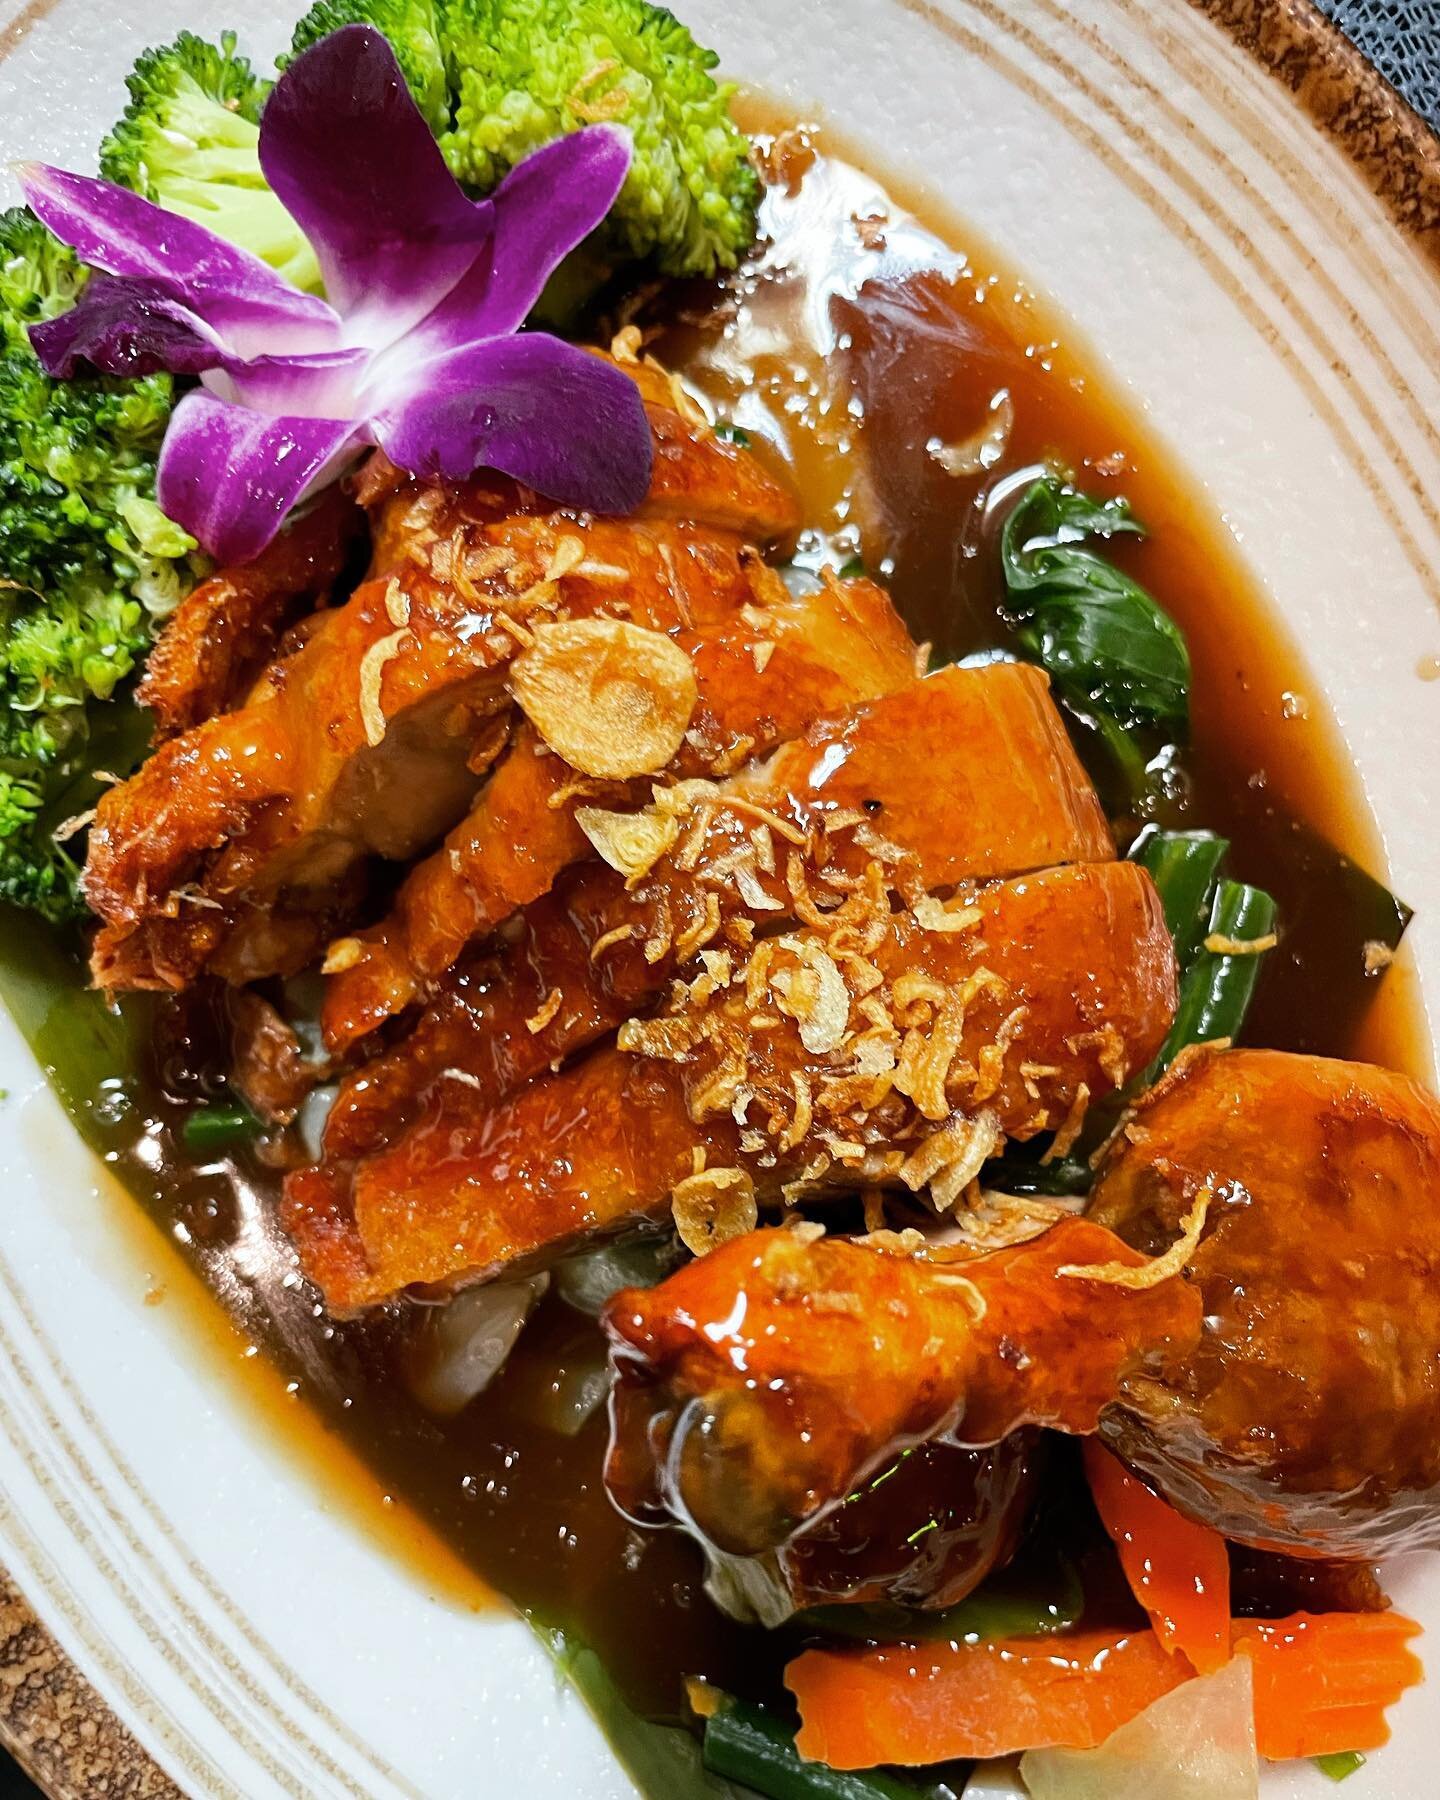 Flavors and taste galore 💫
&ldquo;Duck Tamarind&rdquo;

📍Lan Larb Chiangmai 

#lanlarbchiangmai 
☎️ (646) 895-9264
📍227 Centre st. NY
⏰11:30AM-10:00PM

#soho #thaifoodisthebest #bestthaifood #chiangmai #thaistreetfood #nyc #northernofthailand 
#ne